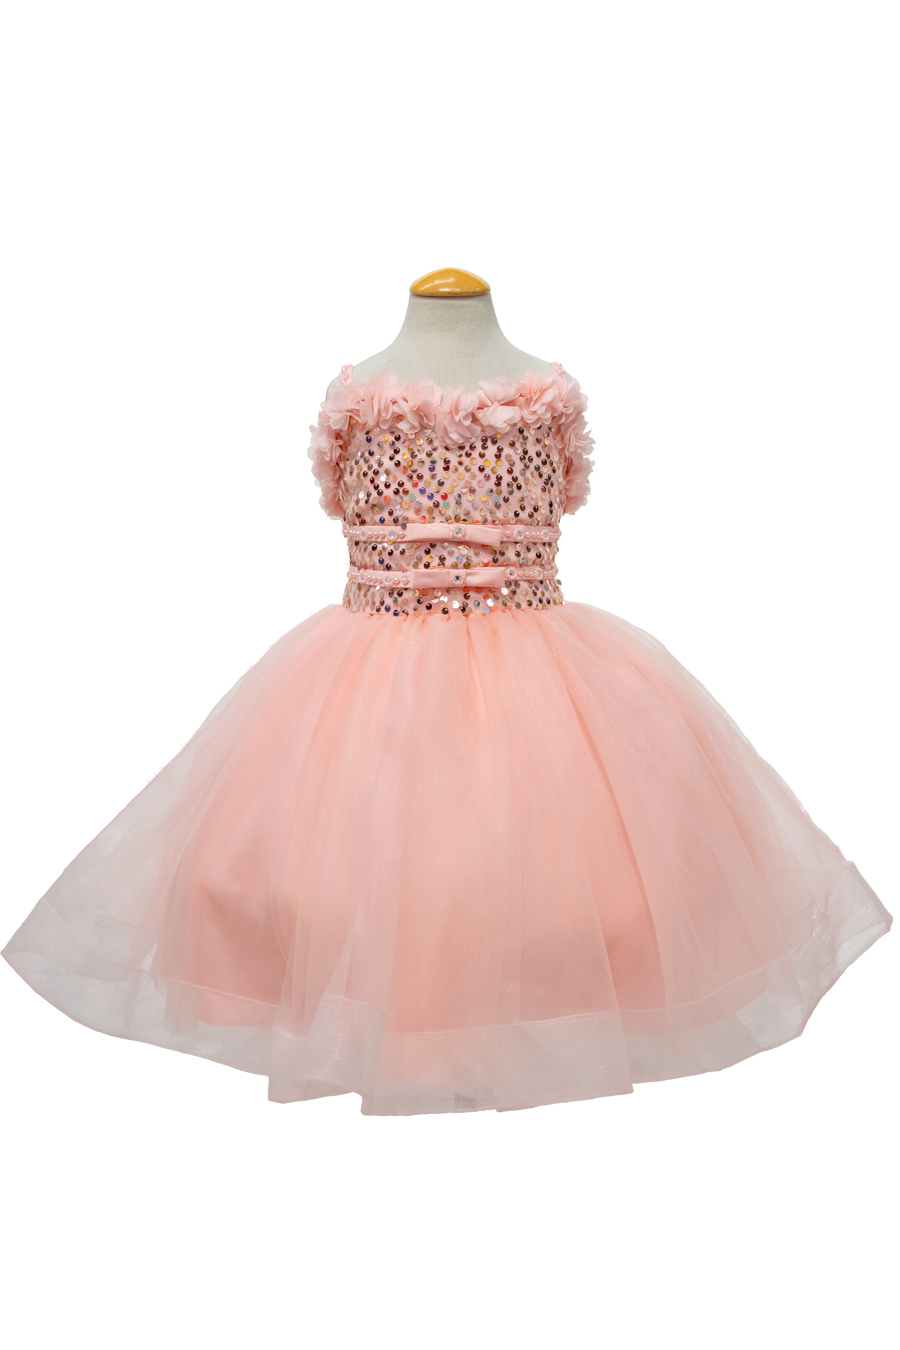 Ball Gown Short Sleeve Kids Prom Dress for Girls CH0109